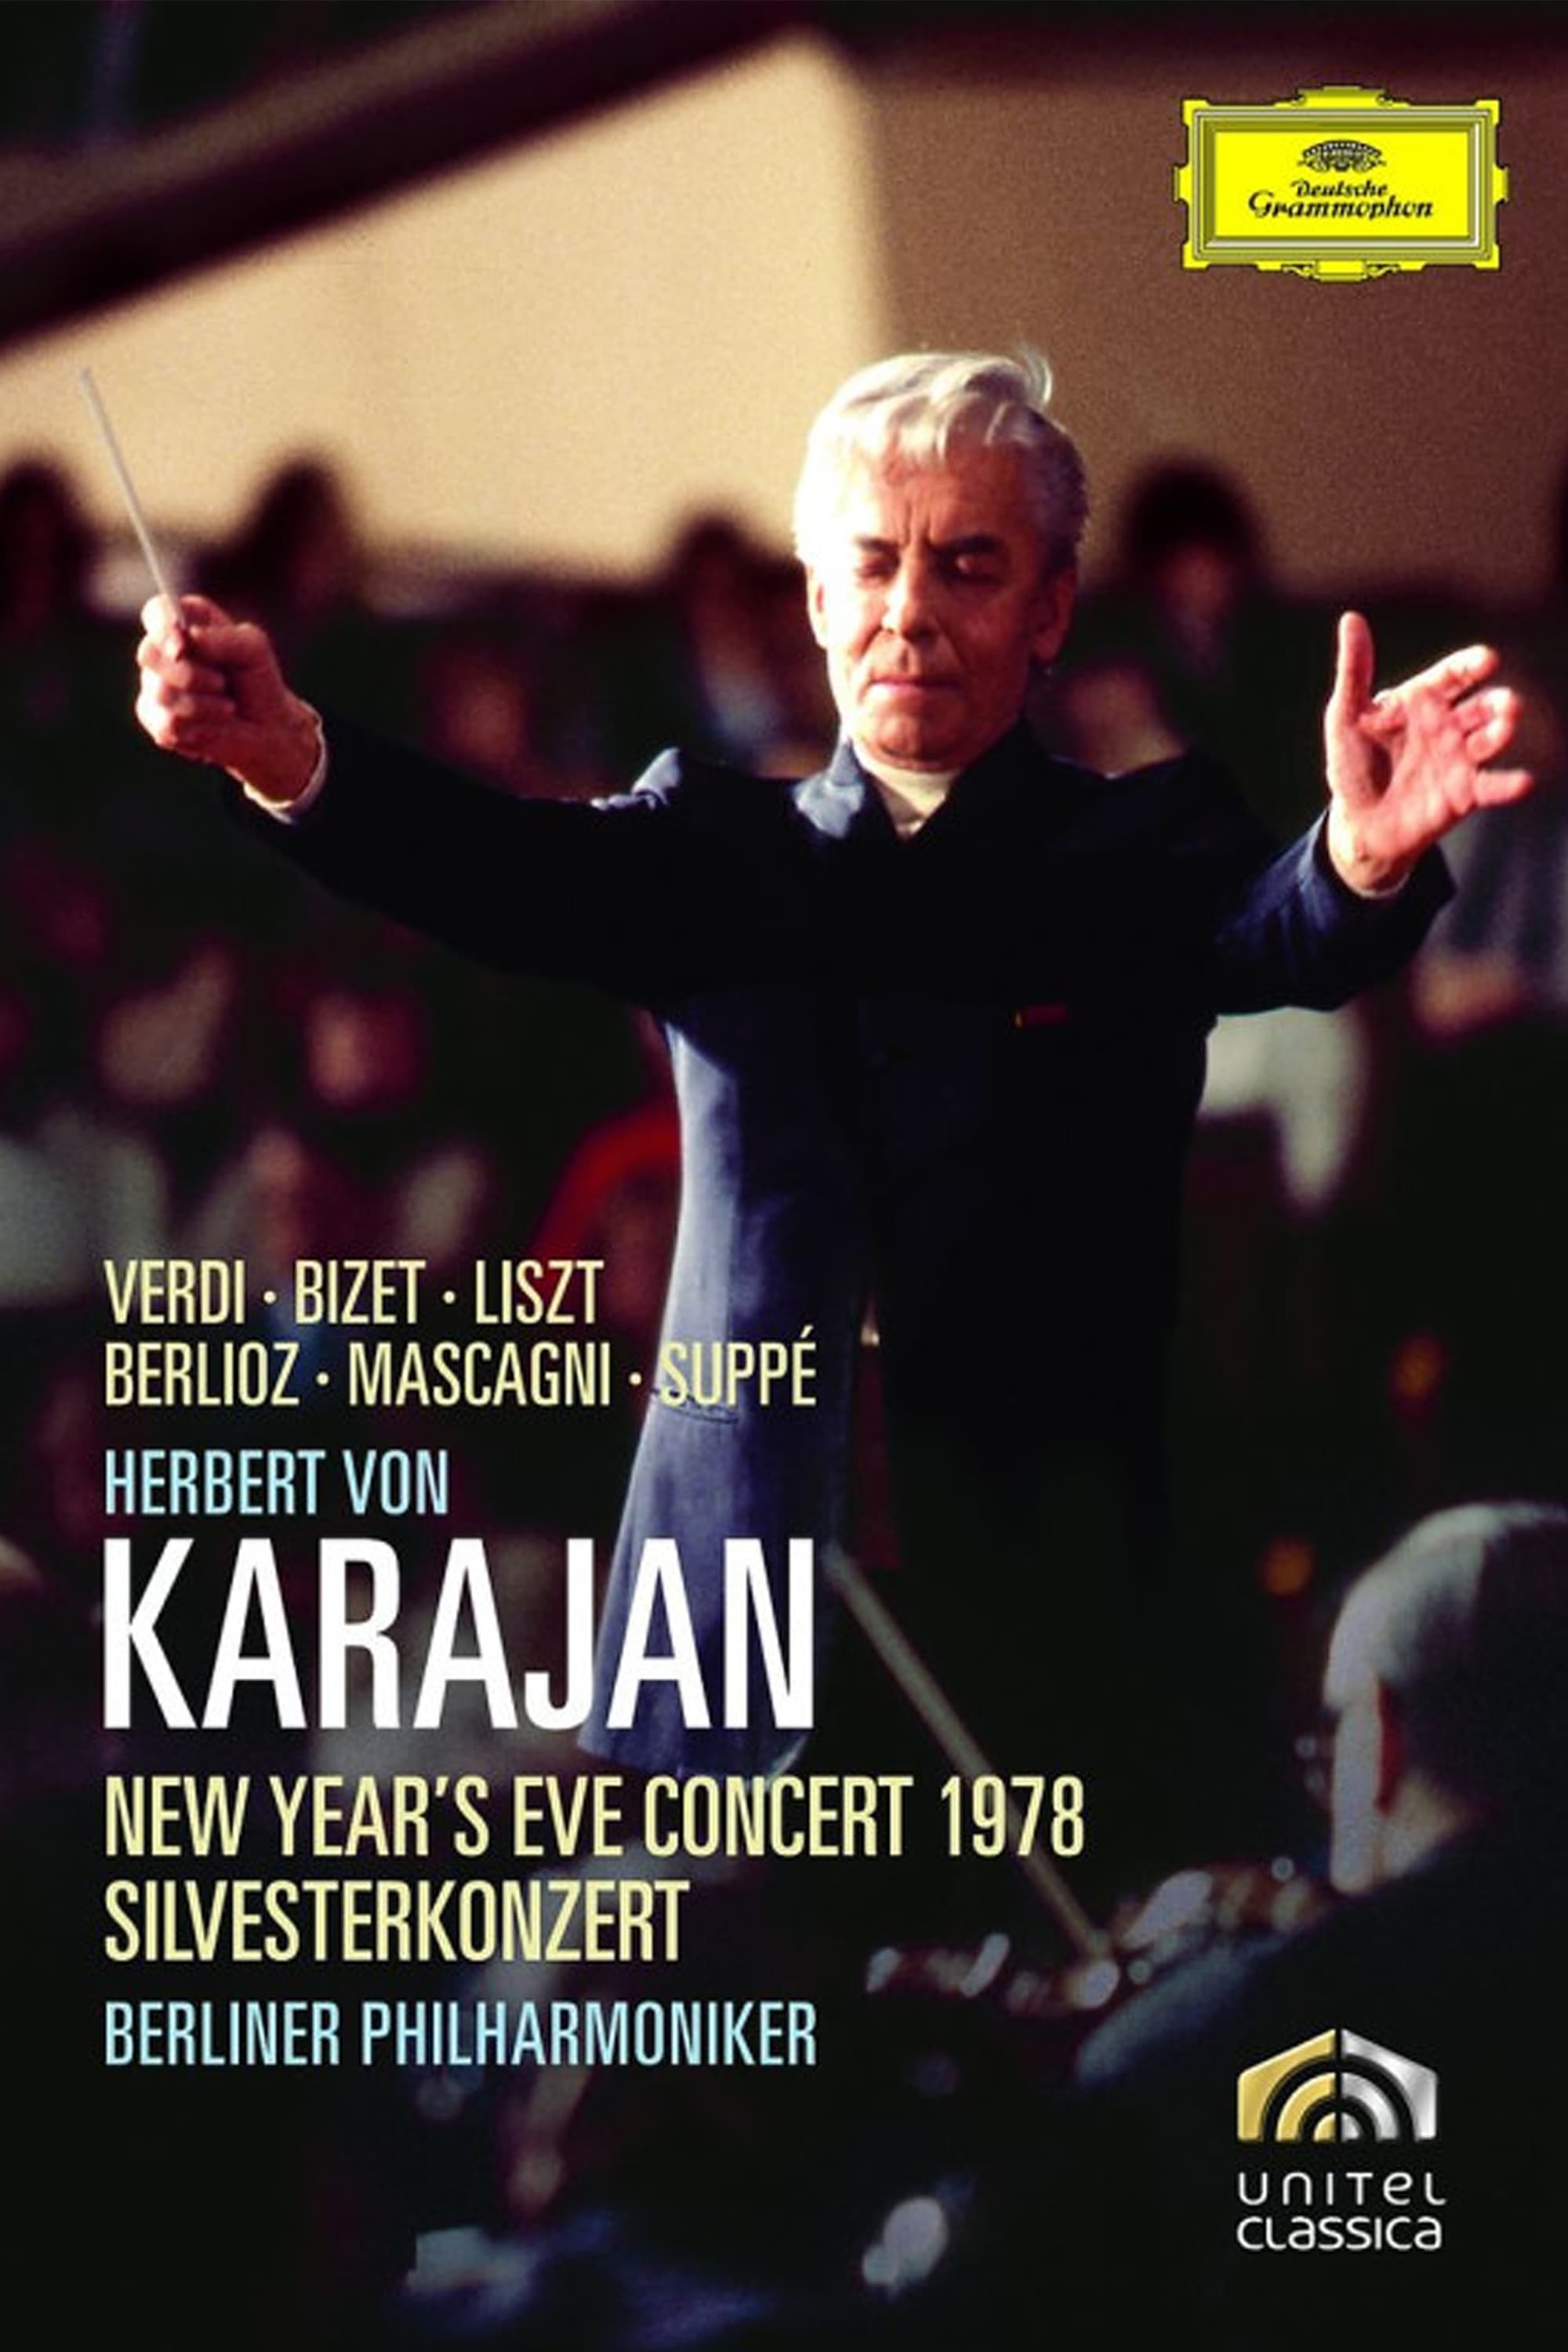 Karajan: New Year's Eve Concert